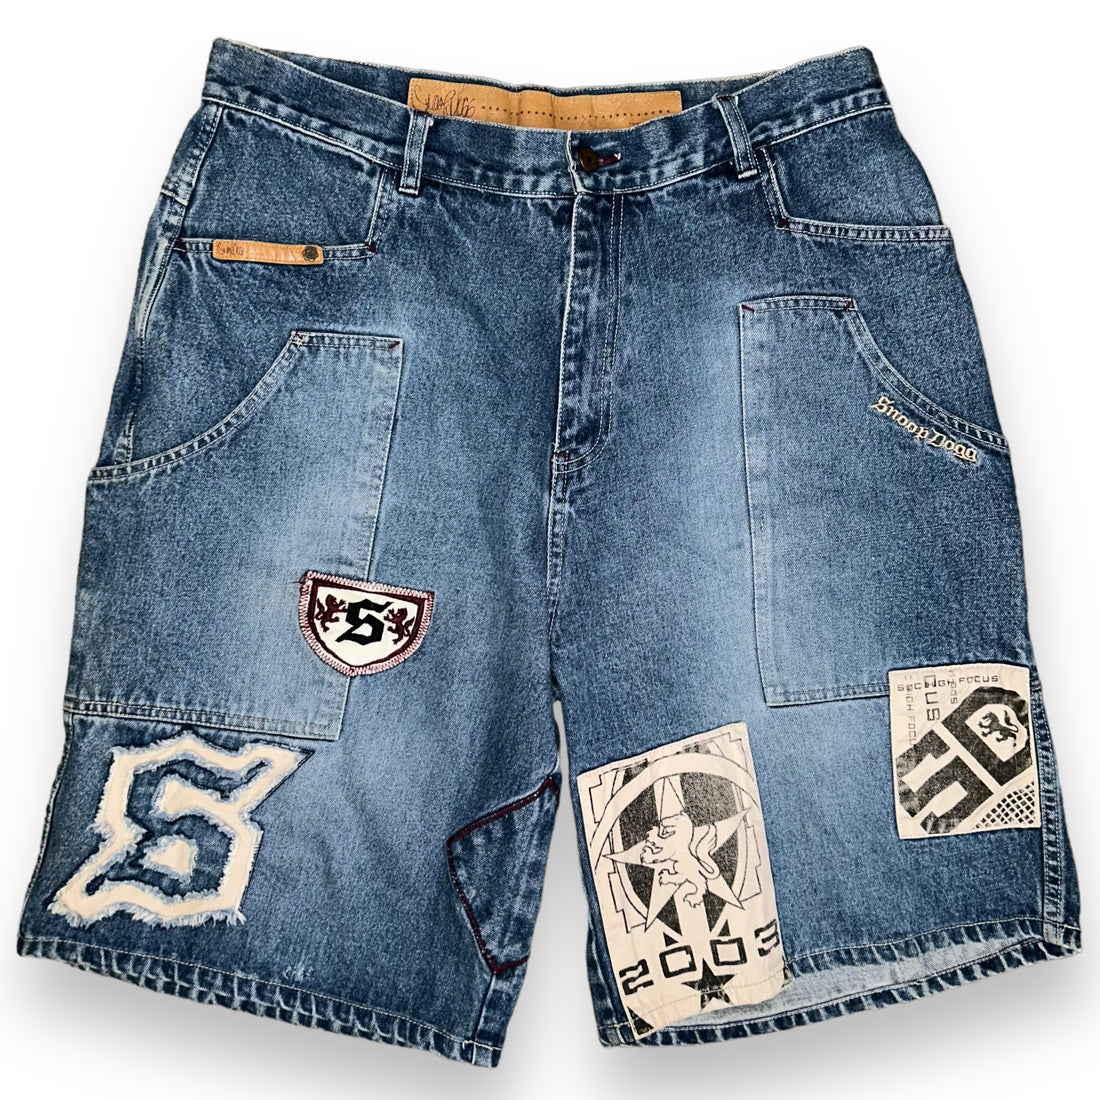 Snoop Dogg Vintage Baggy Shorts (36 US XL)